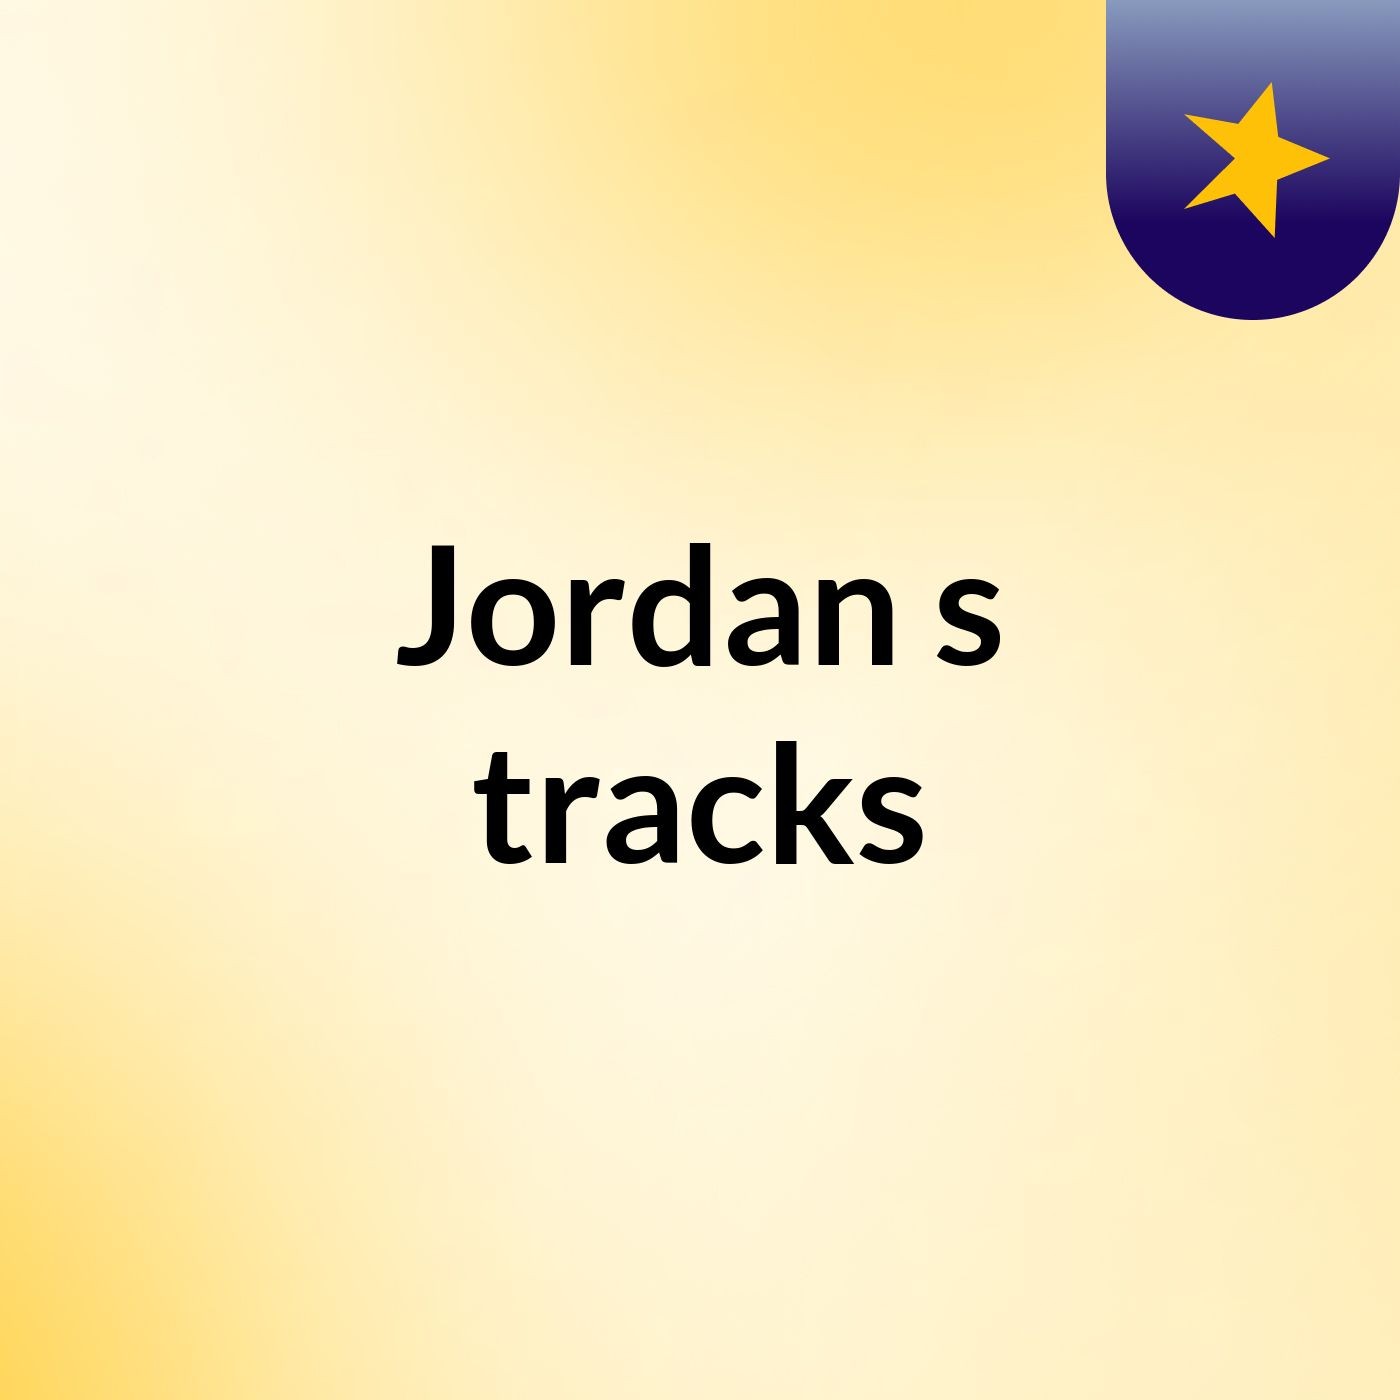 Jordan's tracks